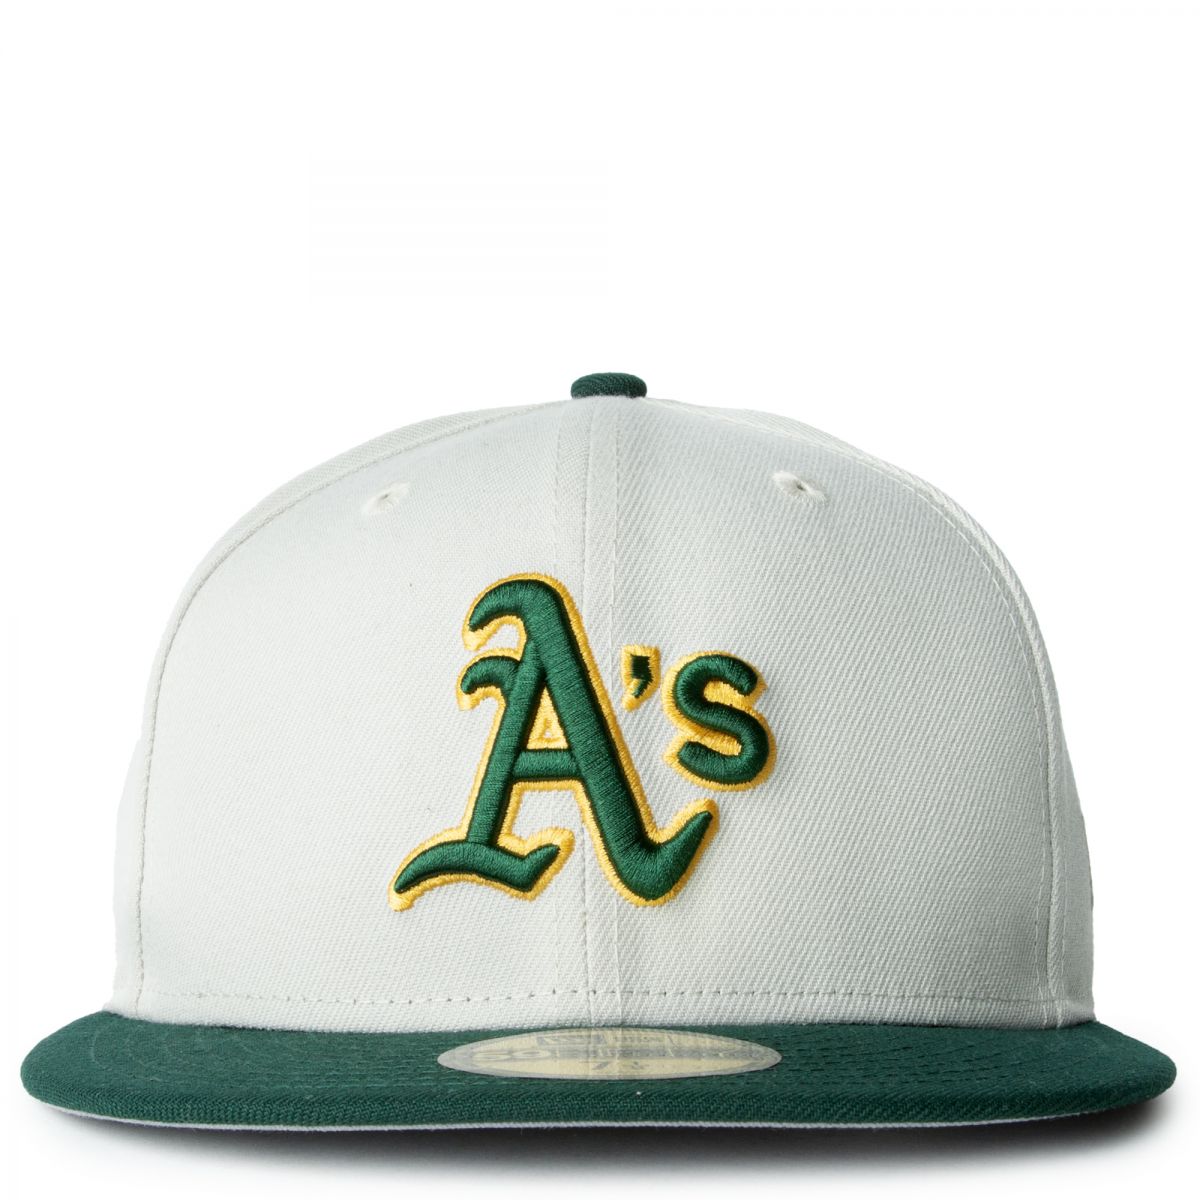 New Era 59Fifty Oakland Athletics Logo Patch Jersey Hat - White